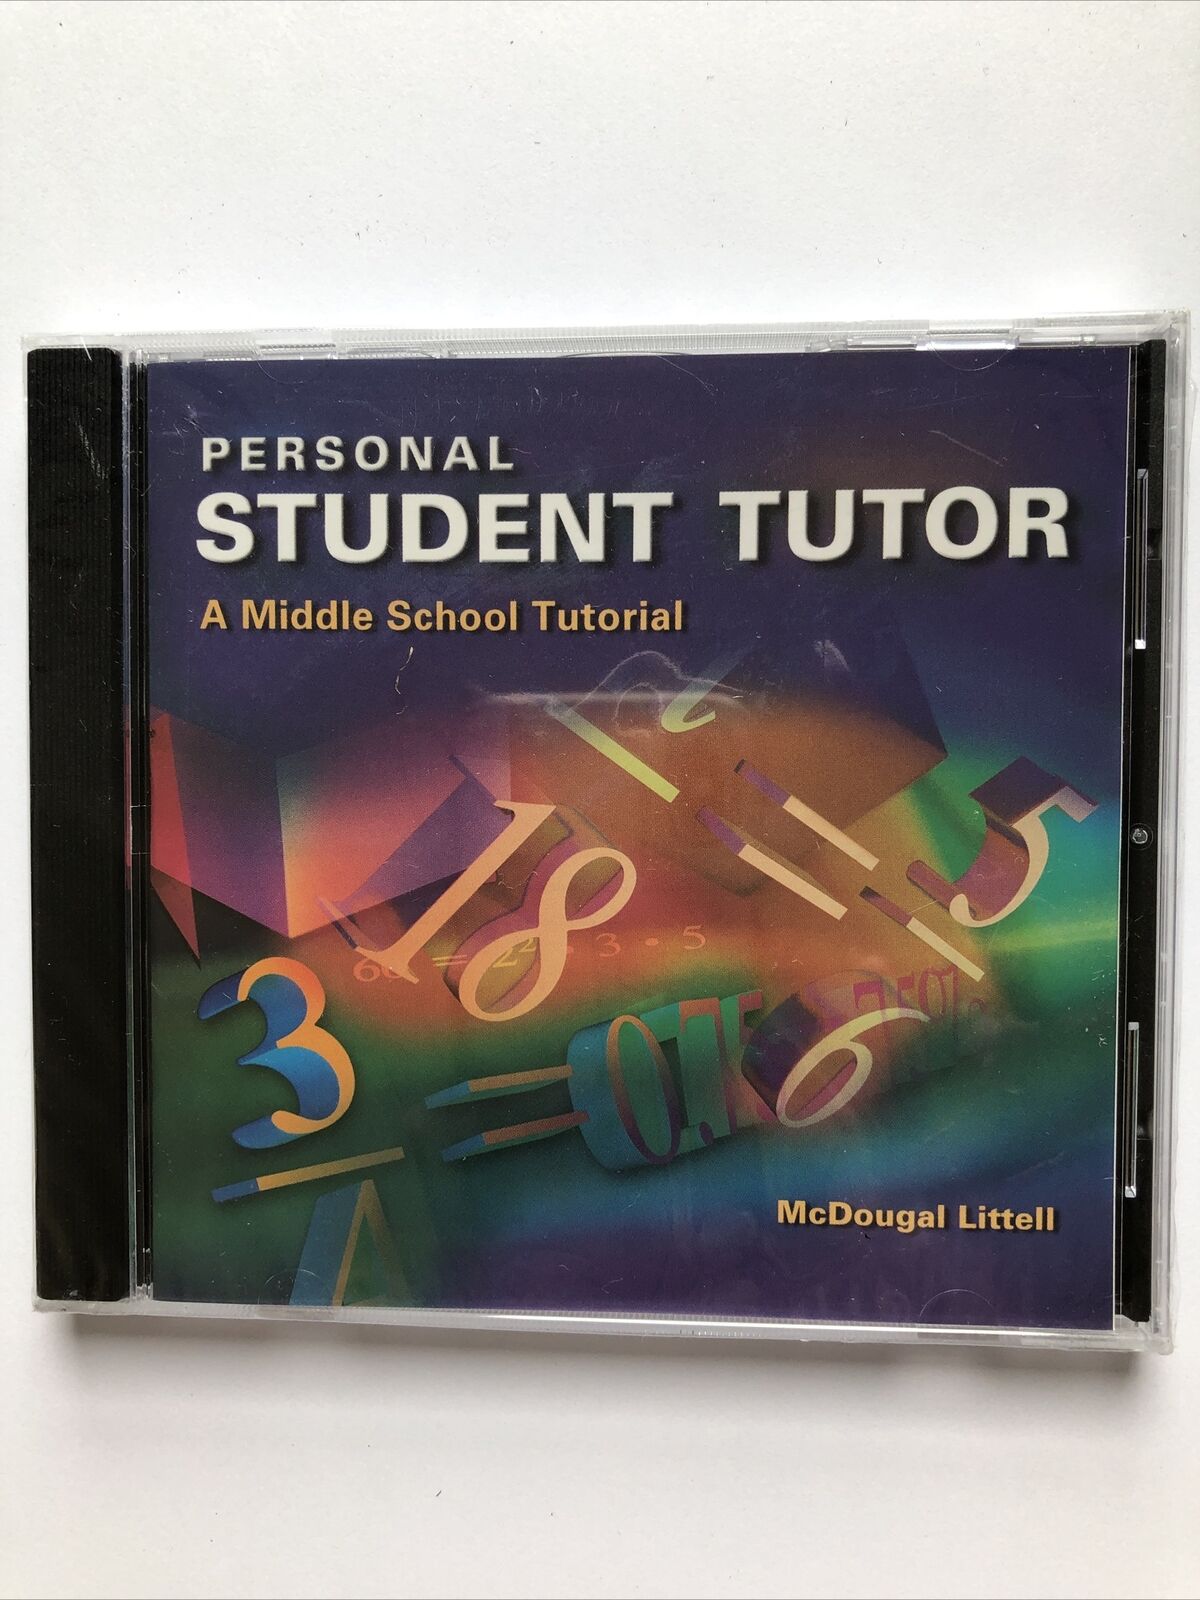 McDougal Littell Personal Student Tutor CD-ROM Middle School Home-School